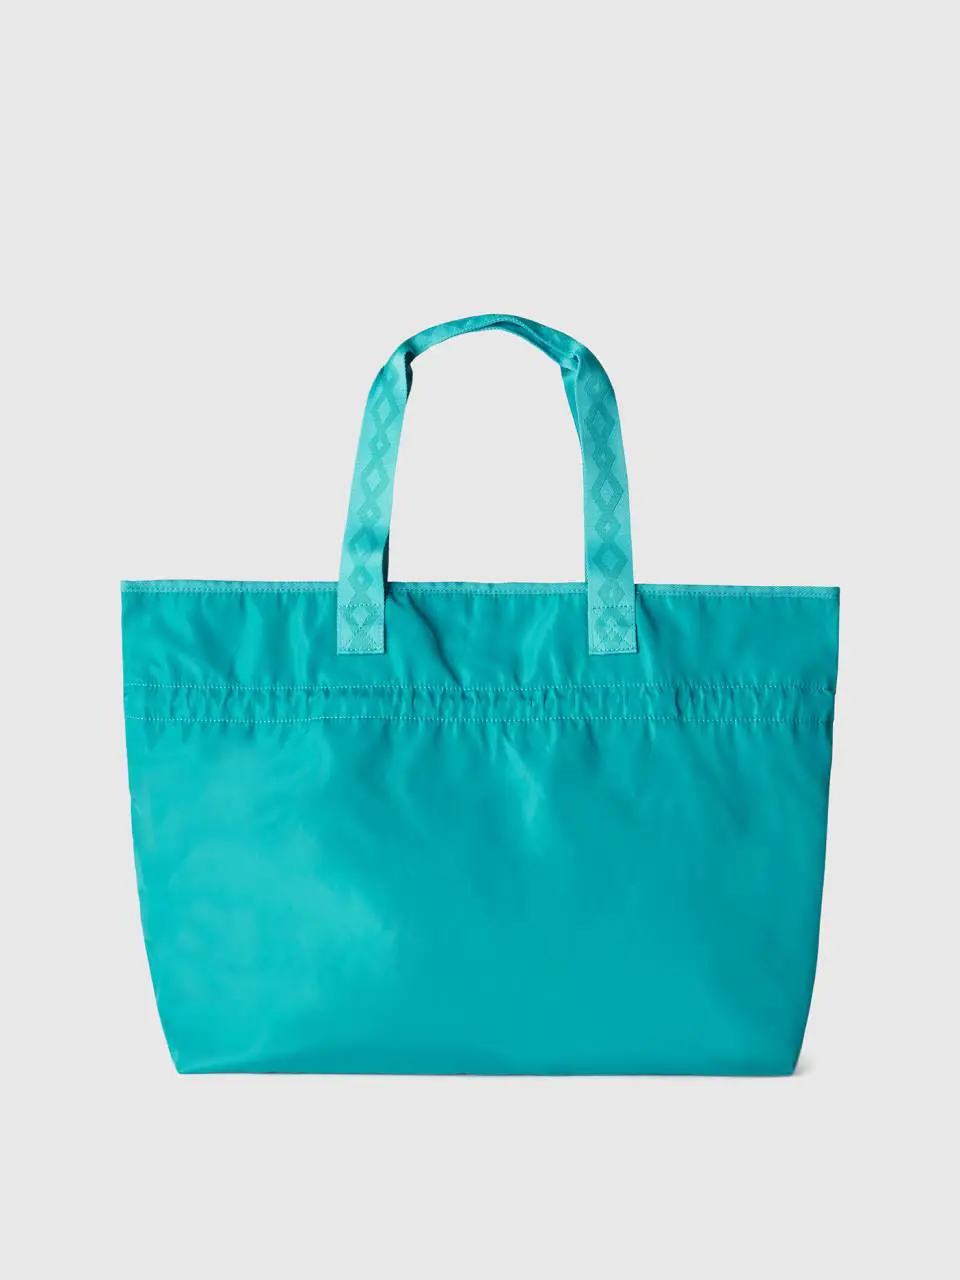 Benetton beach bag with drawstring. 1